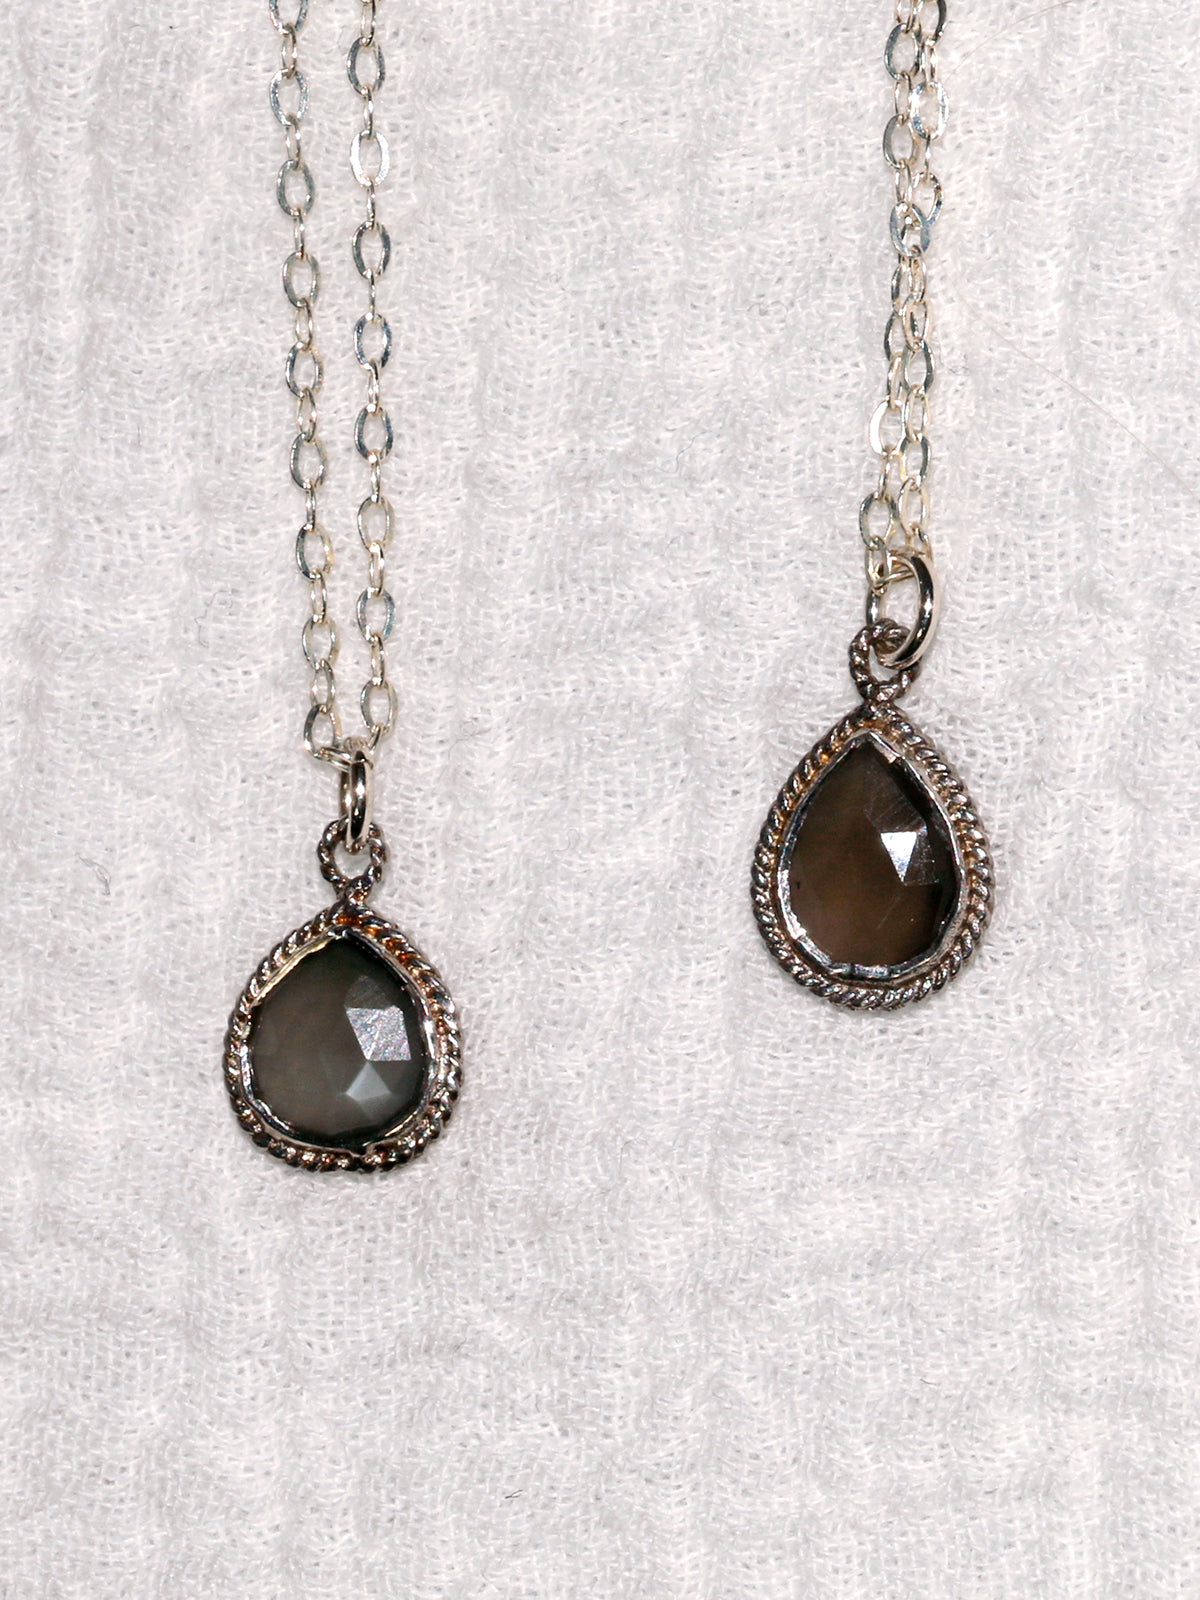 Susan Rifkin Silver Ornate Necklace - Teardrop | More Color Options